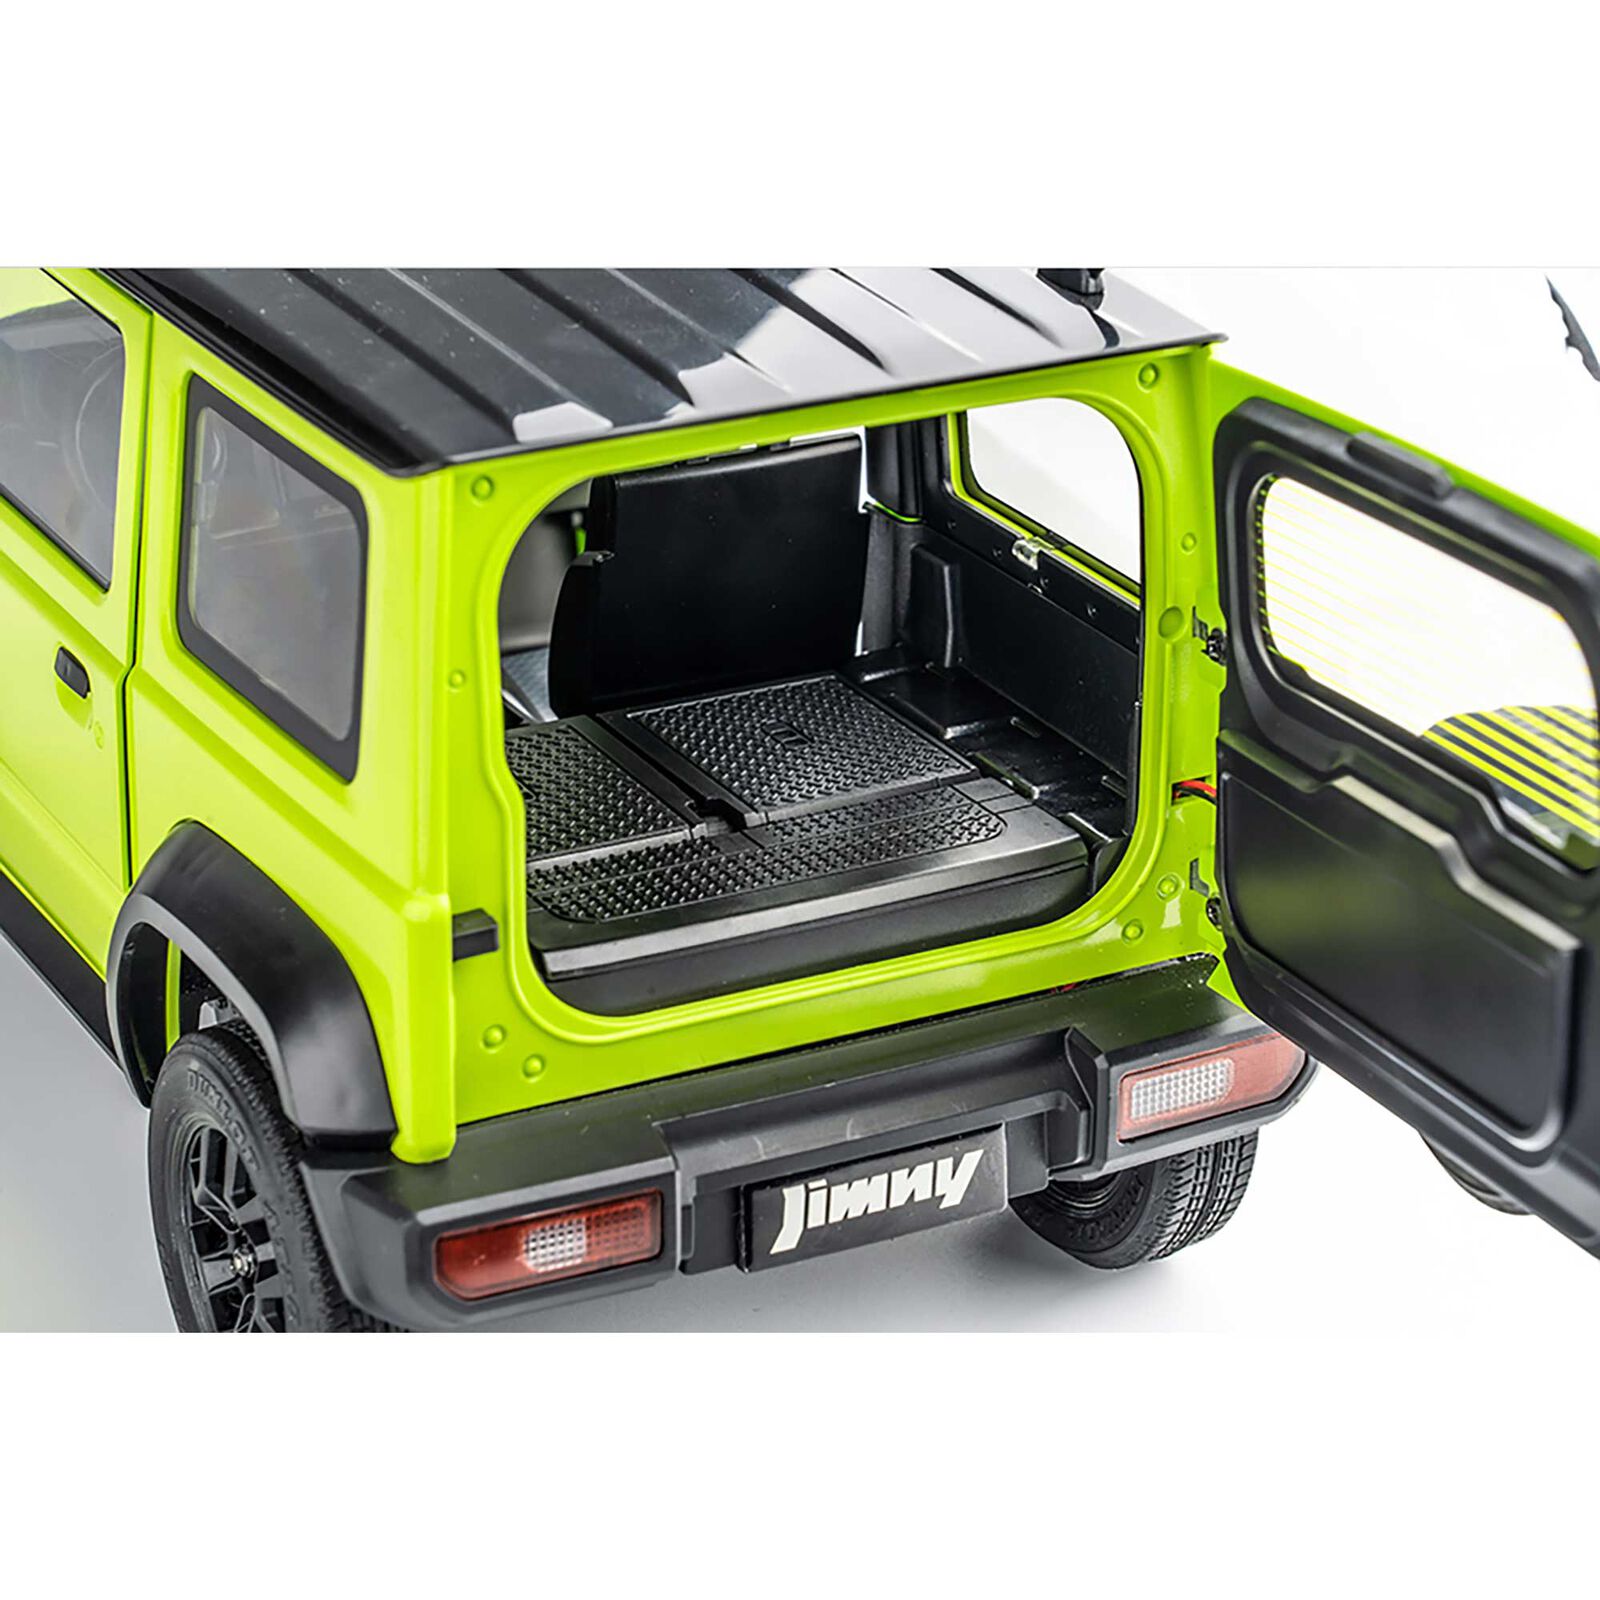 2021 Suzuki Jimny Accessories & Parts at